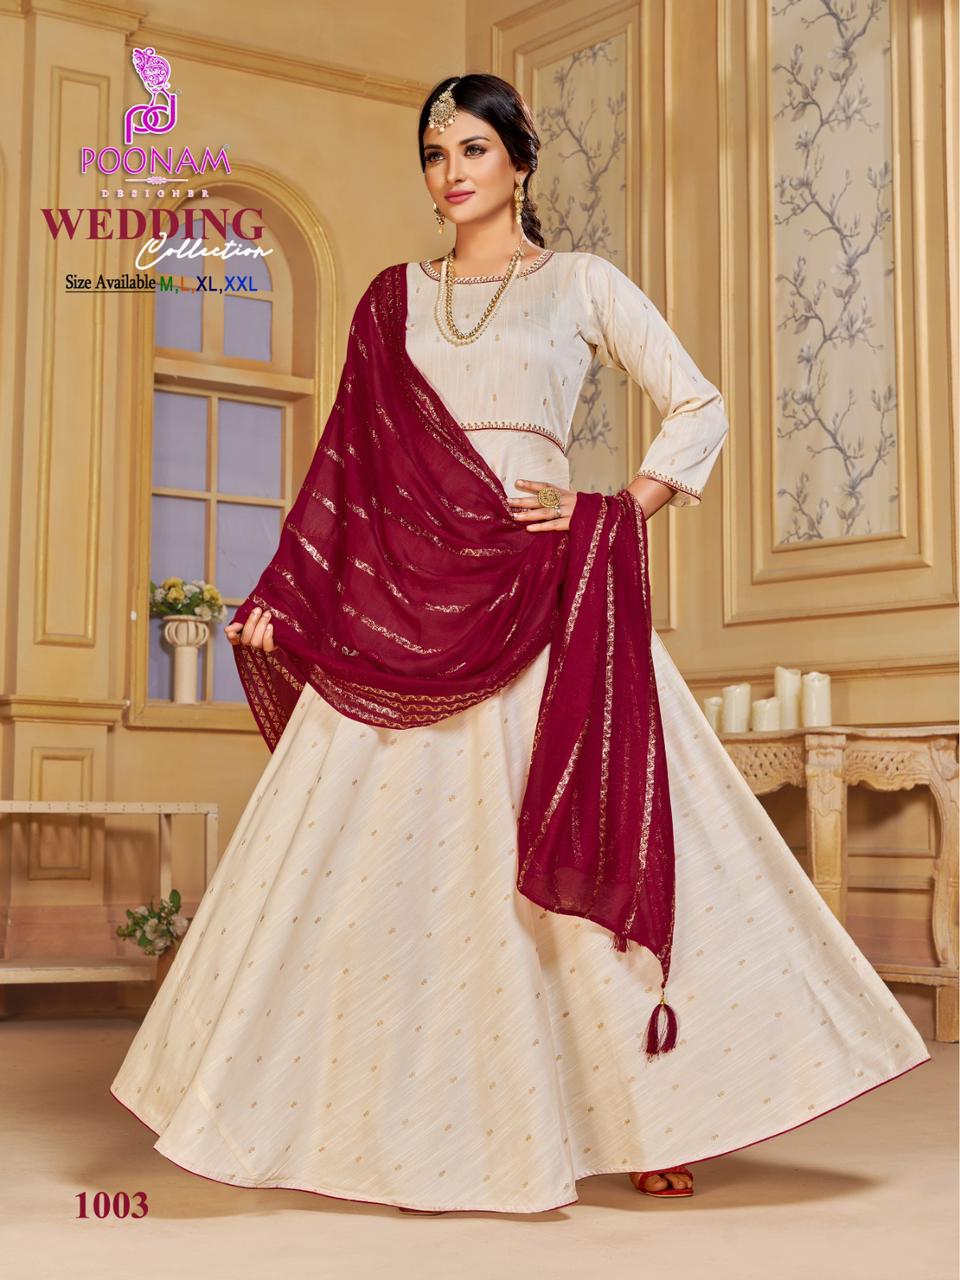 Poonam Designer Wedding Collection 1003